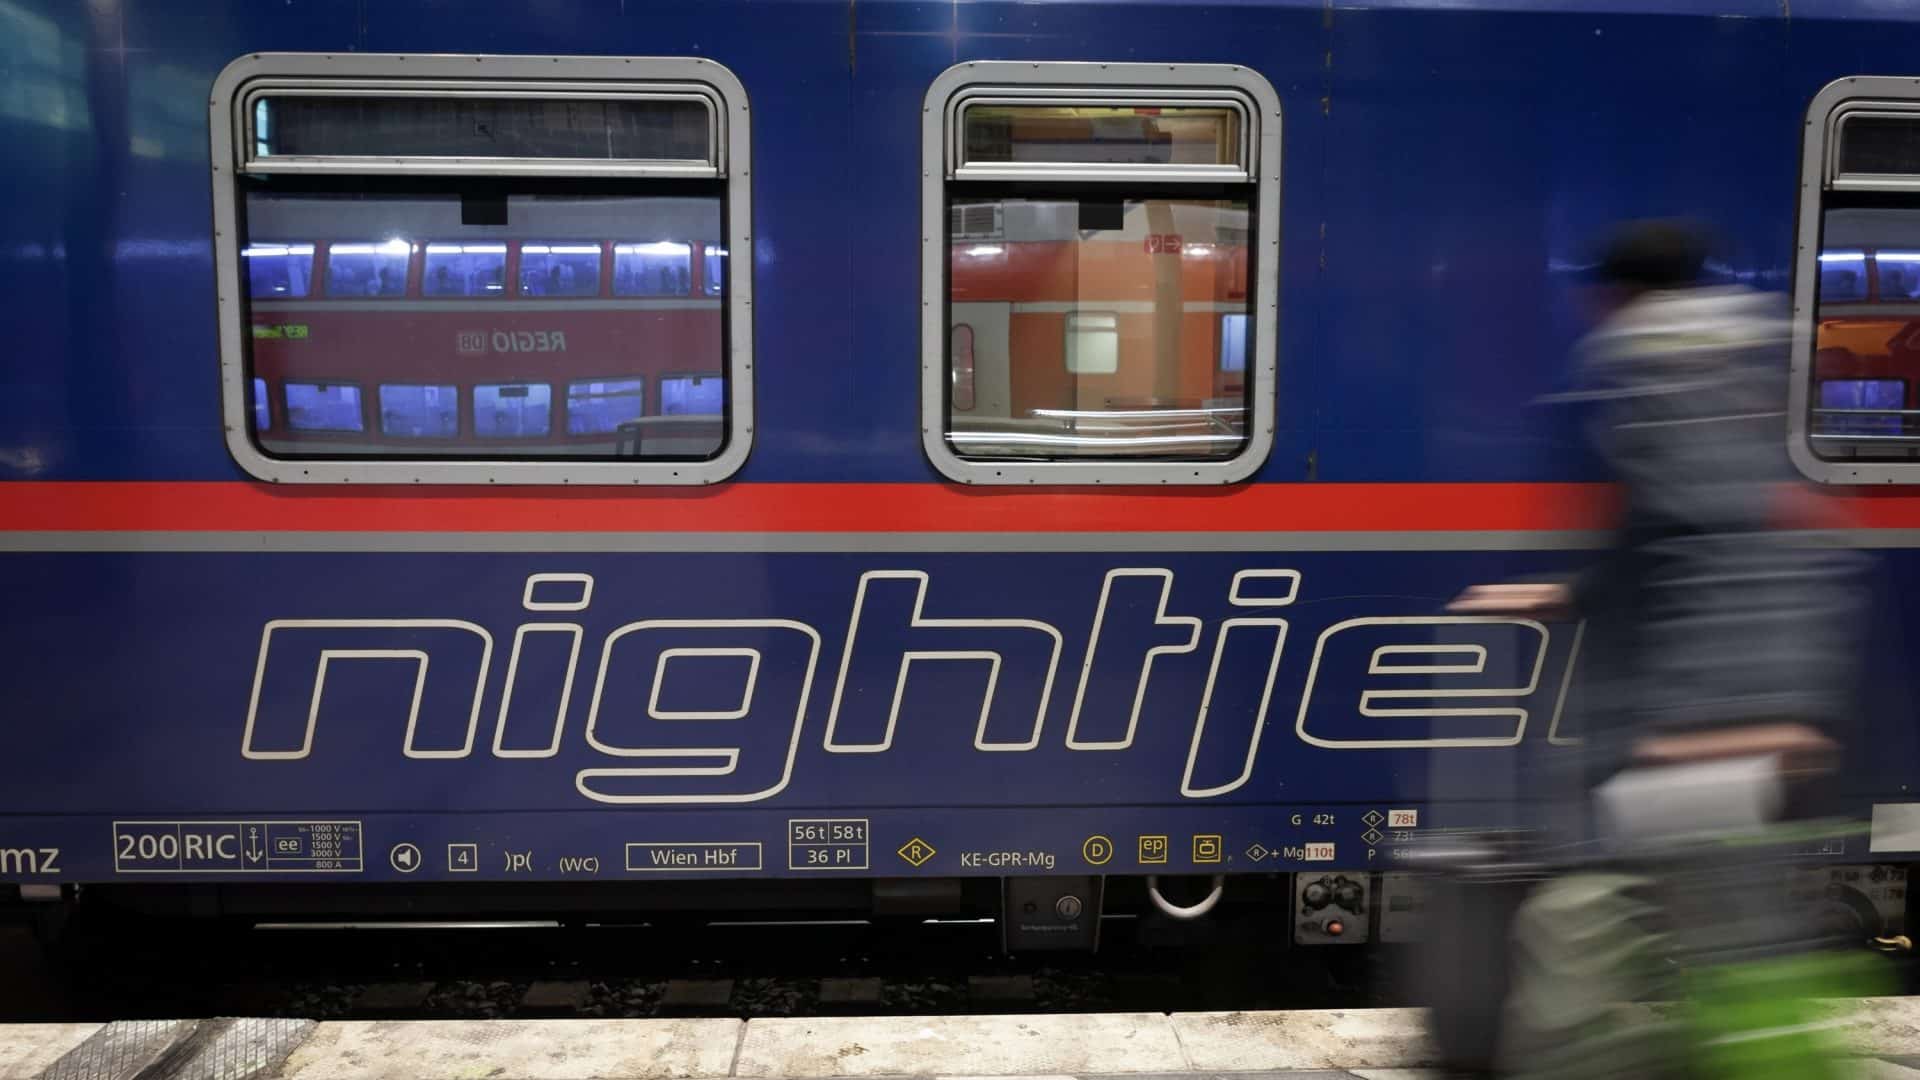 Selective Blur On The Nightjet Logo On An Overnight Train To Austria In Koln Hbf With Blur Of A Passenger Rushing. NightJet Is A Train System Of Austrian Railways.